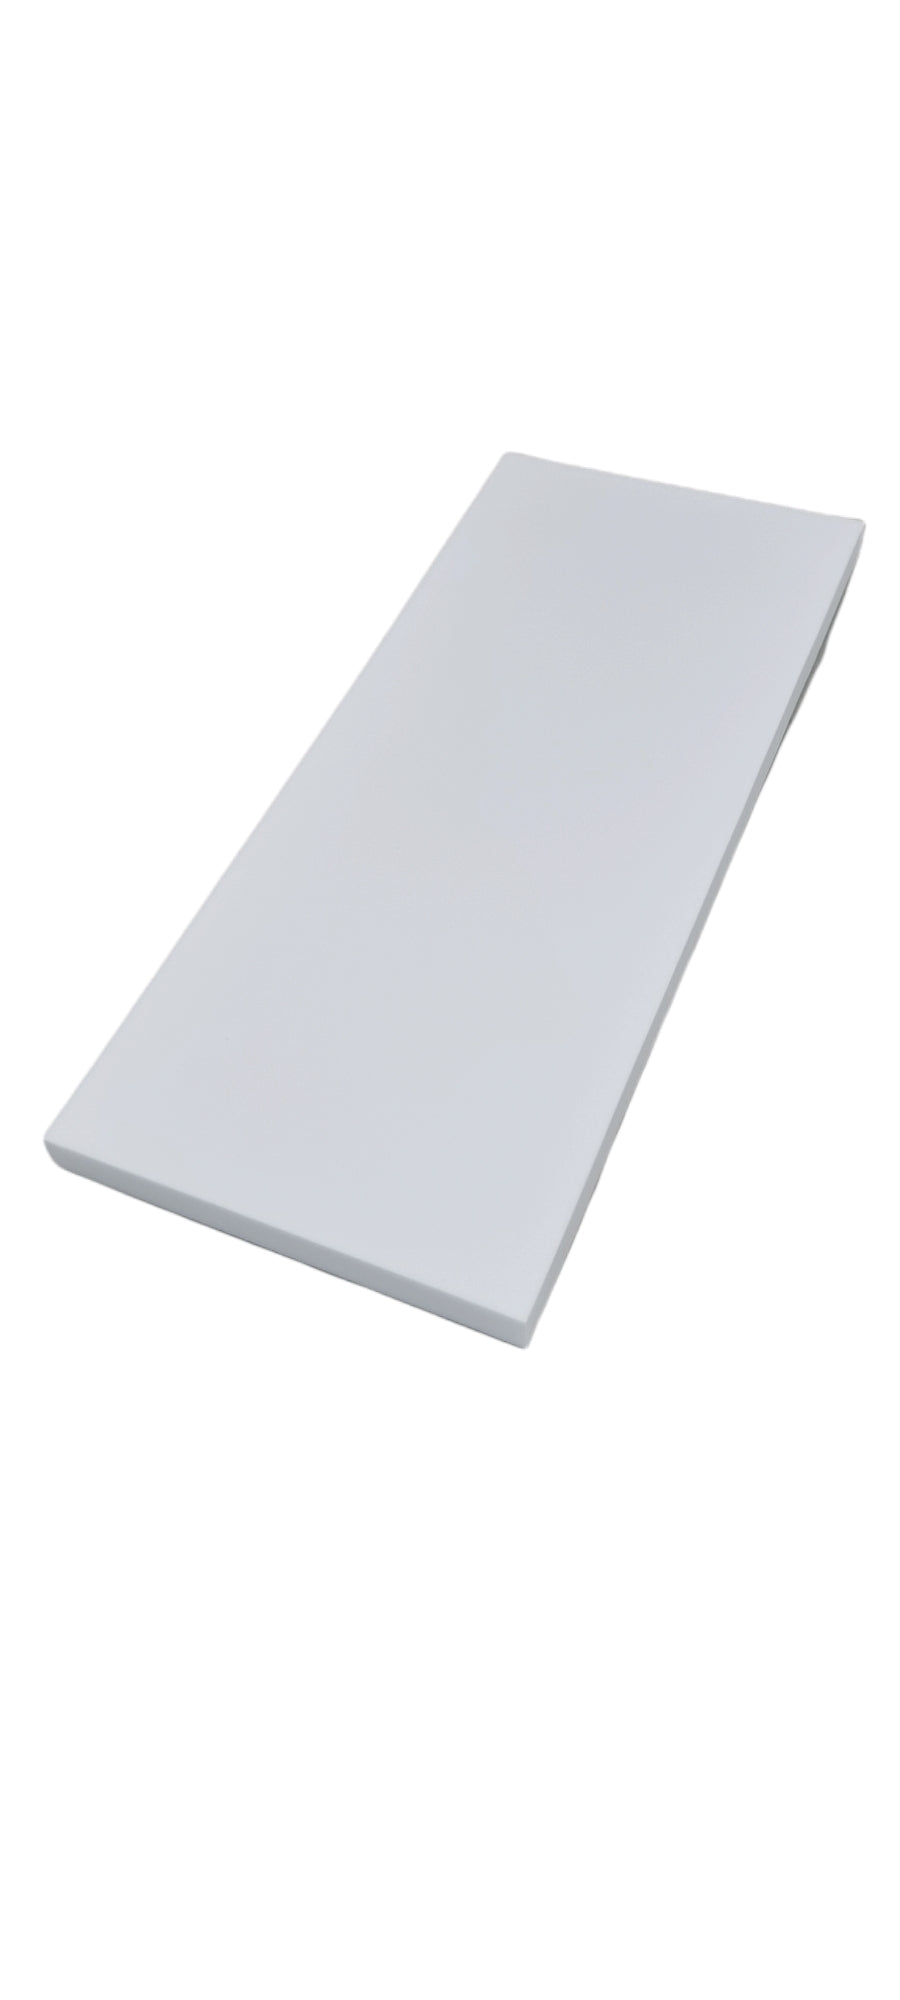 Pro-coustix Melaflex Foam Ceiling Panels Baffles Flat 1200x500x30mm